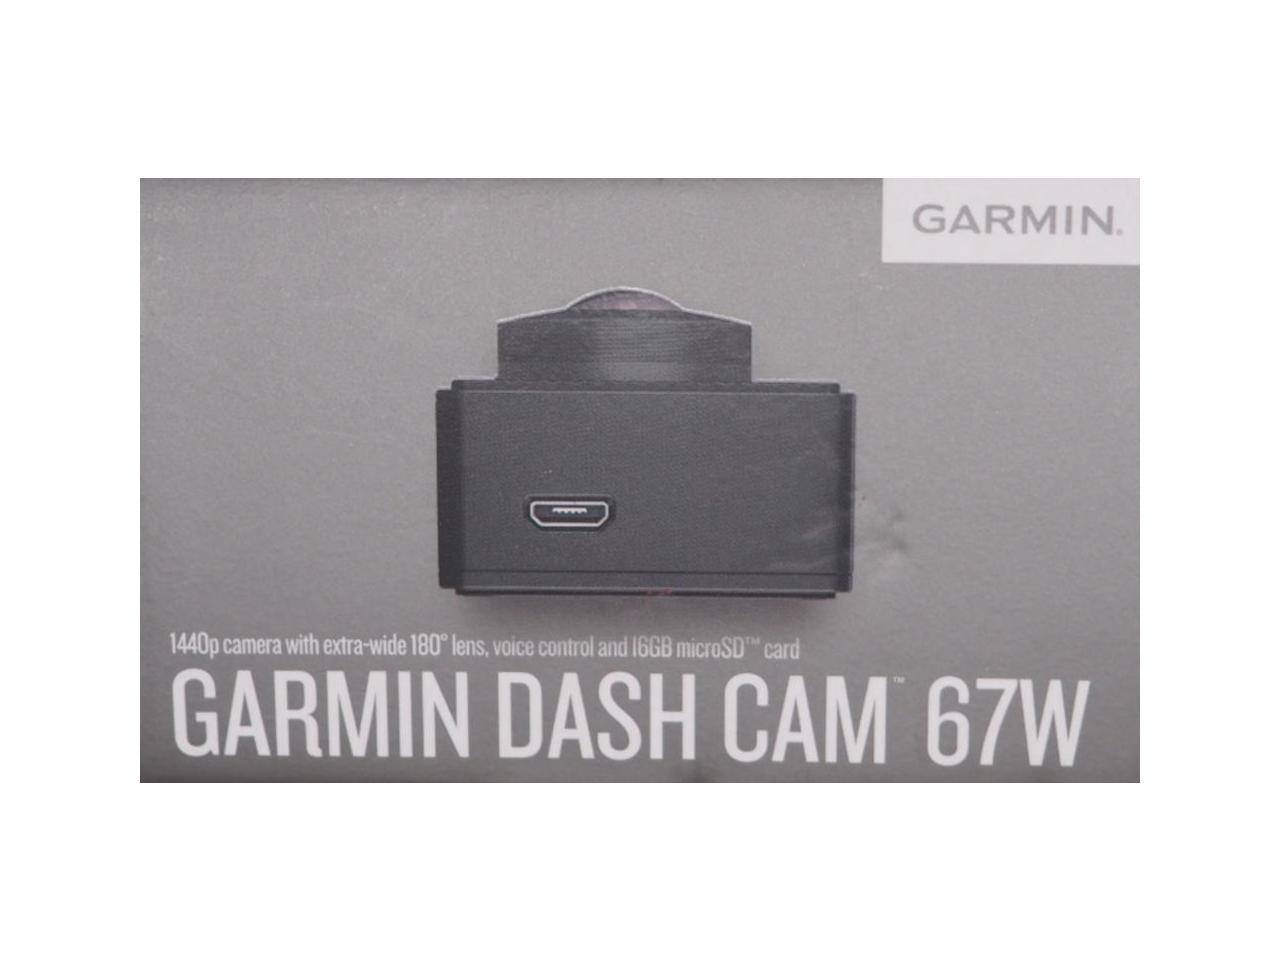 Garmin 67W 1440p Dash Cam, Black #010-02505-05 - image 19 of 21